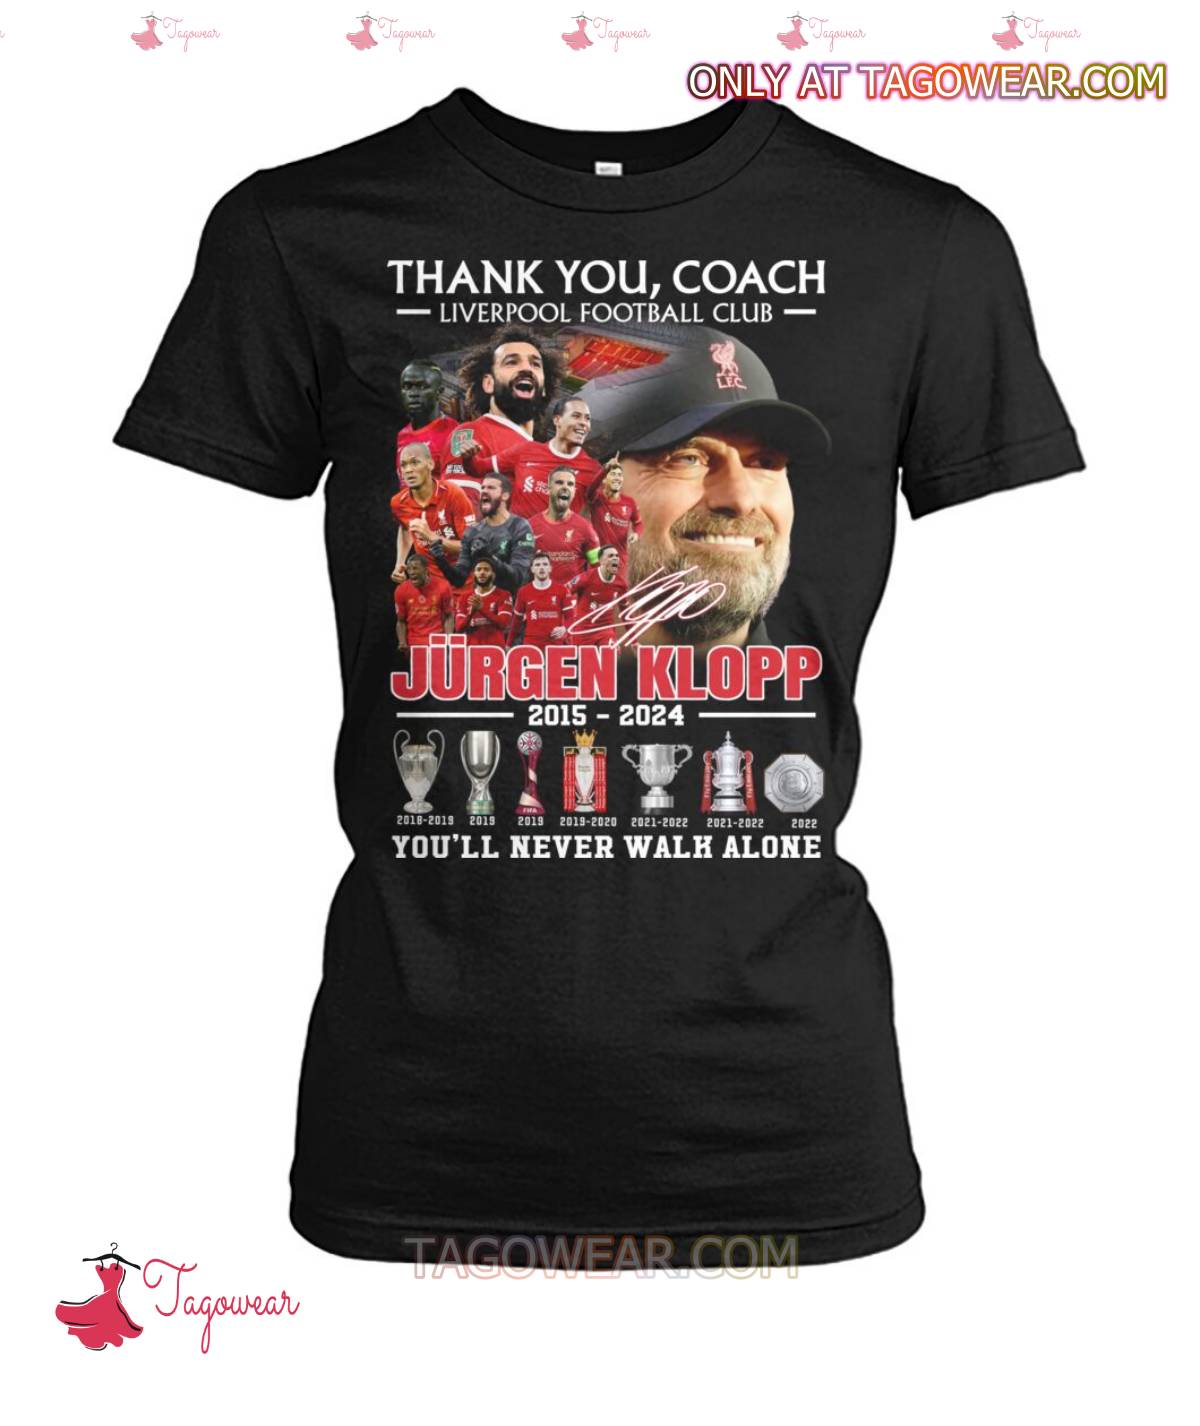 Thank You Coach Liverpool Football Club Jurgen Klopp 2015-2024 You'll Never Walk Alone Shirt x